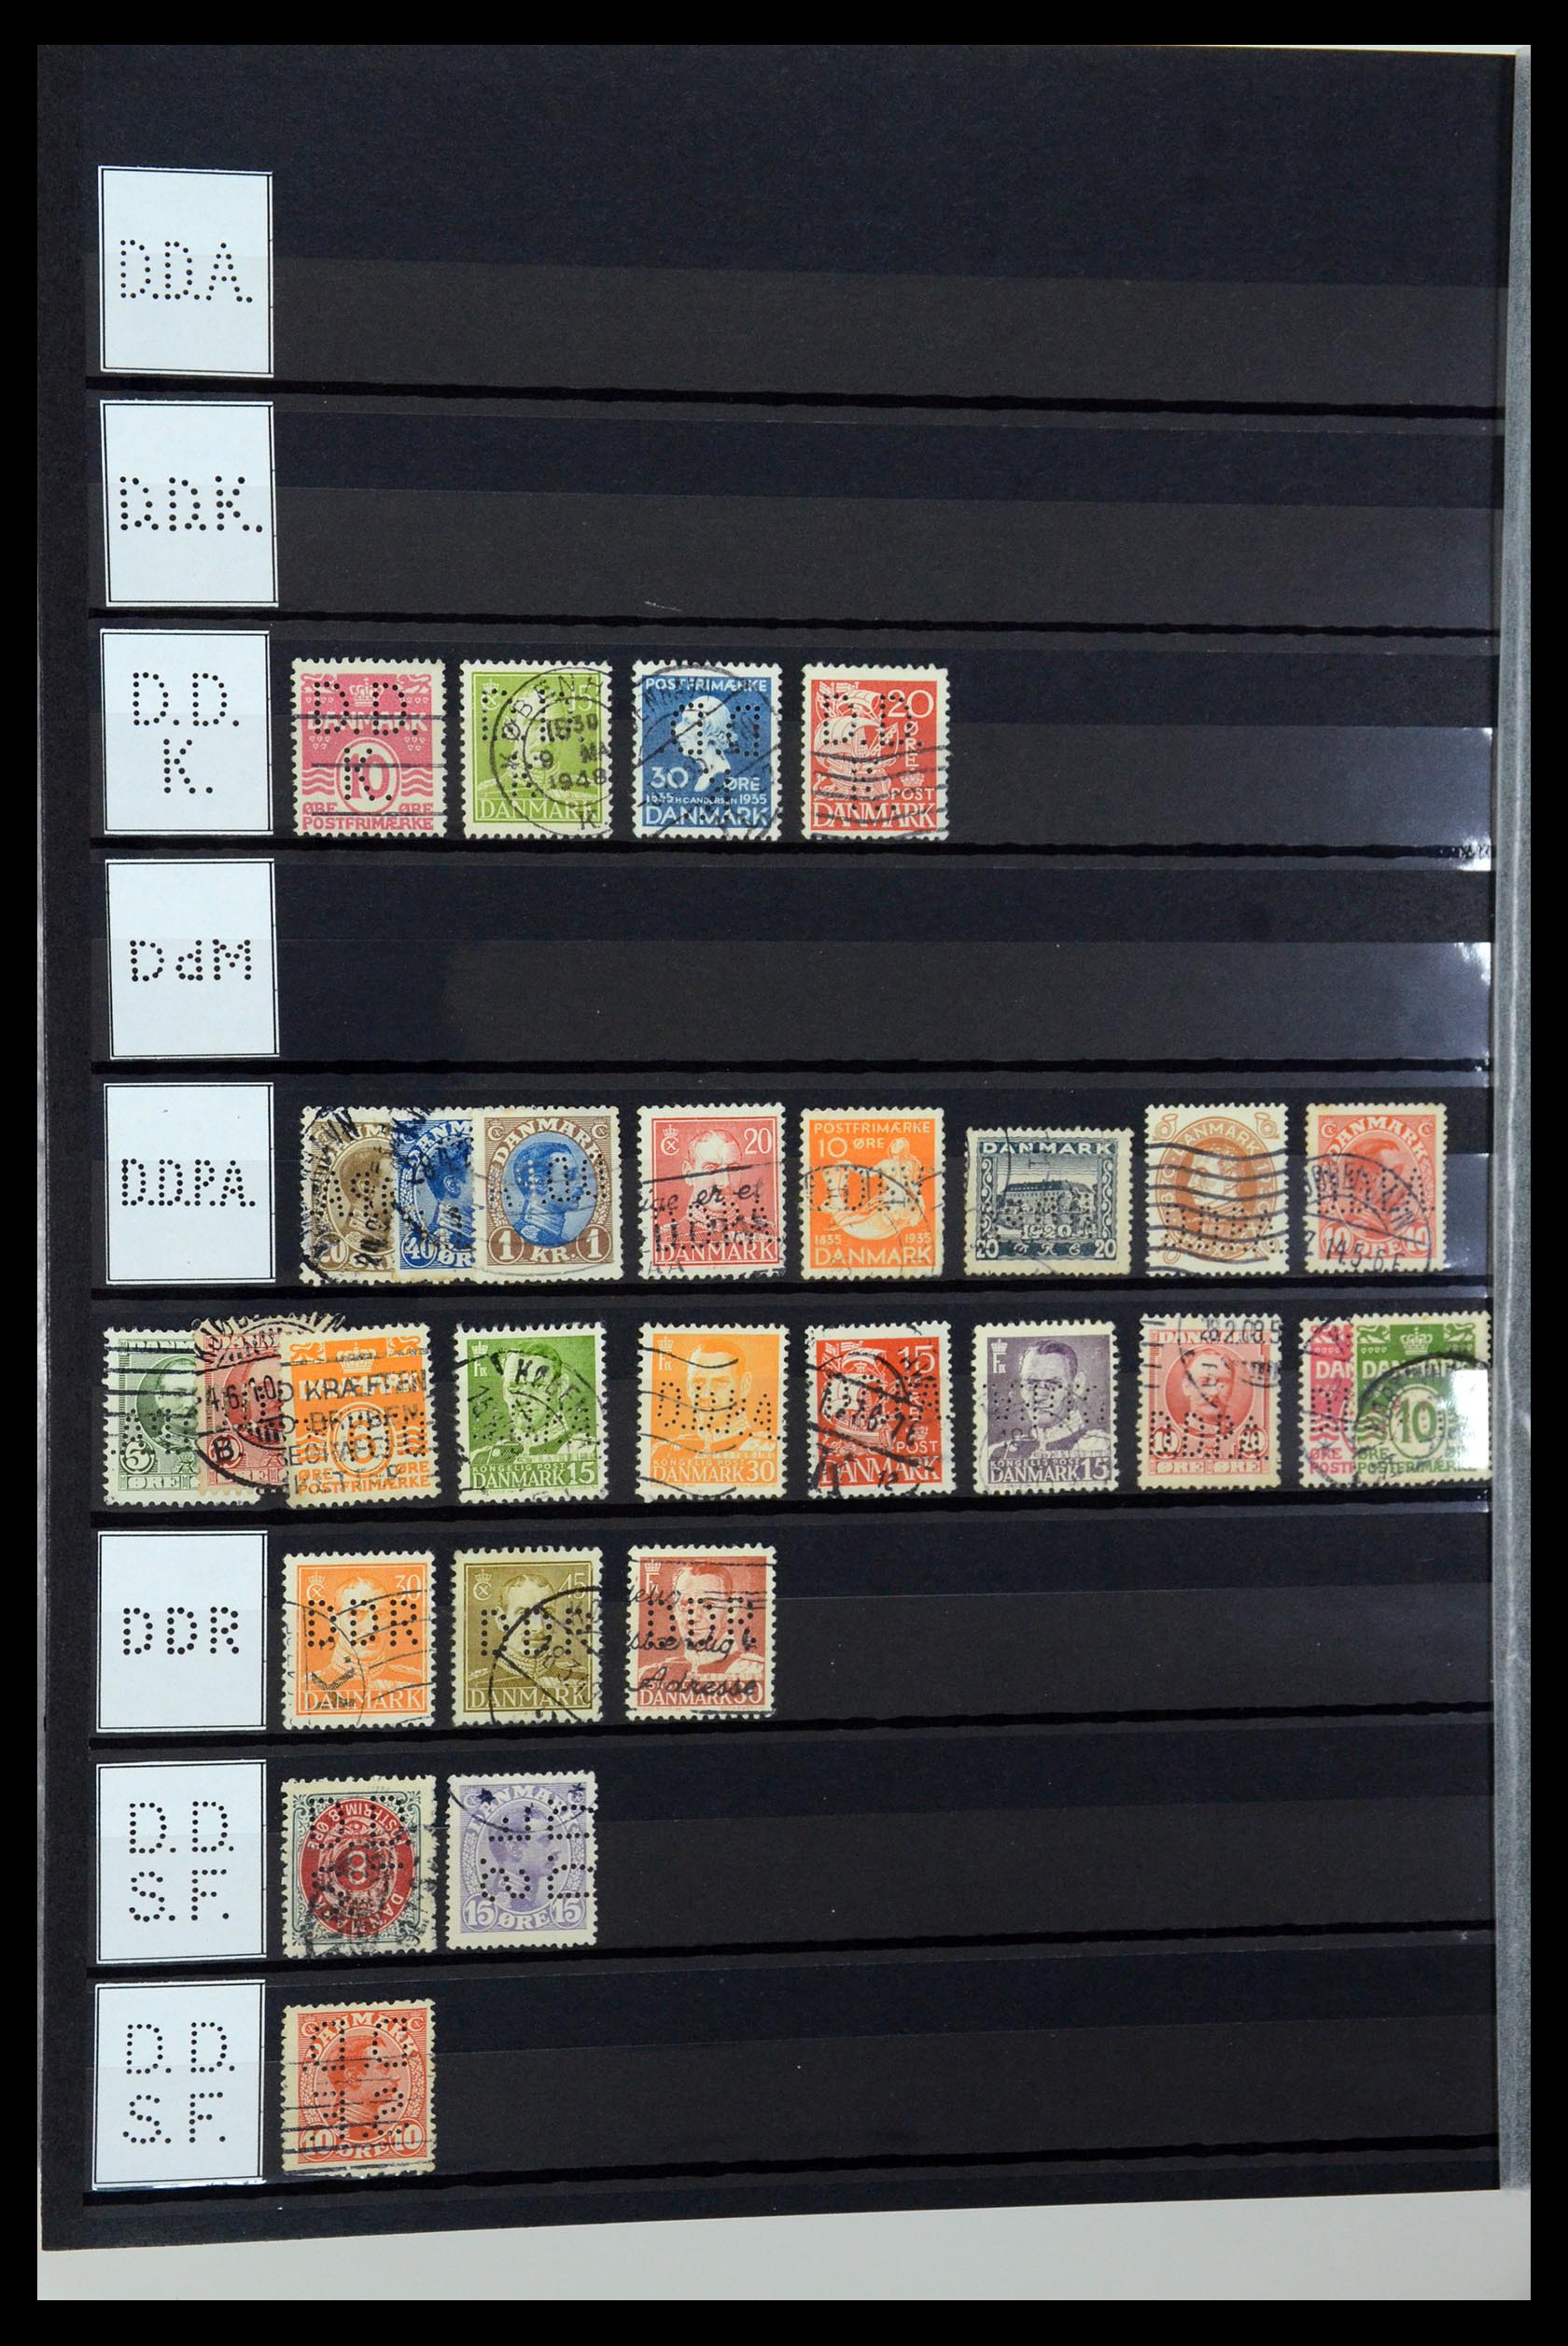 36396 034 - Stamp collection 36396 Denmark perfins.